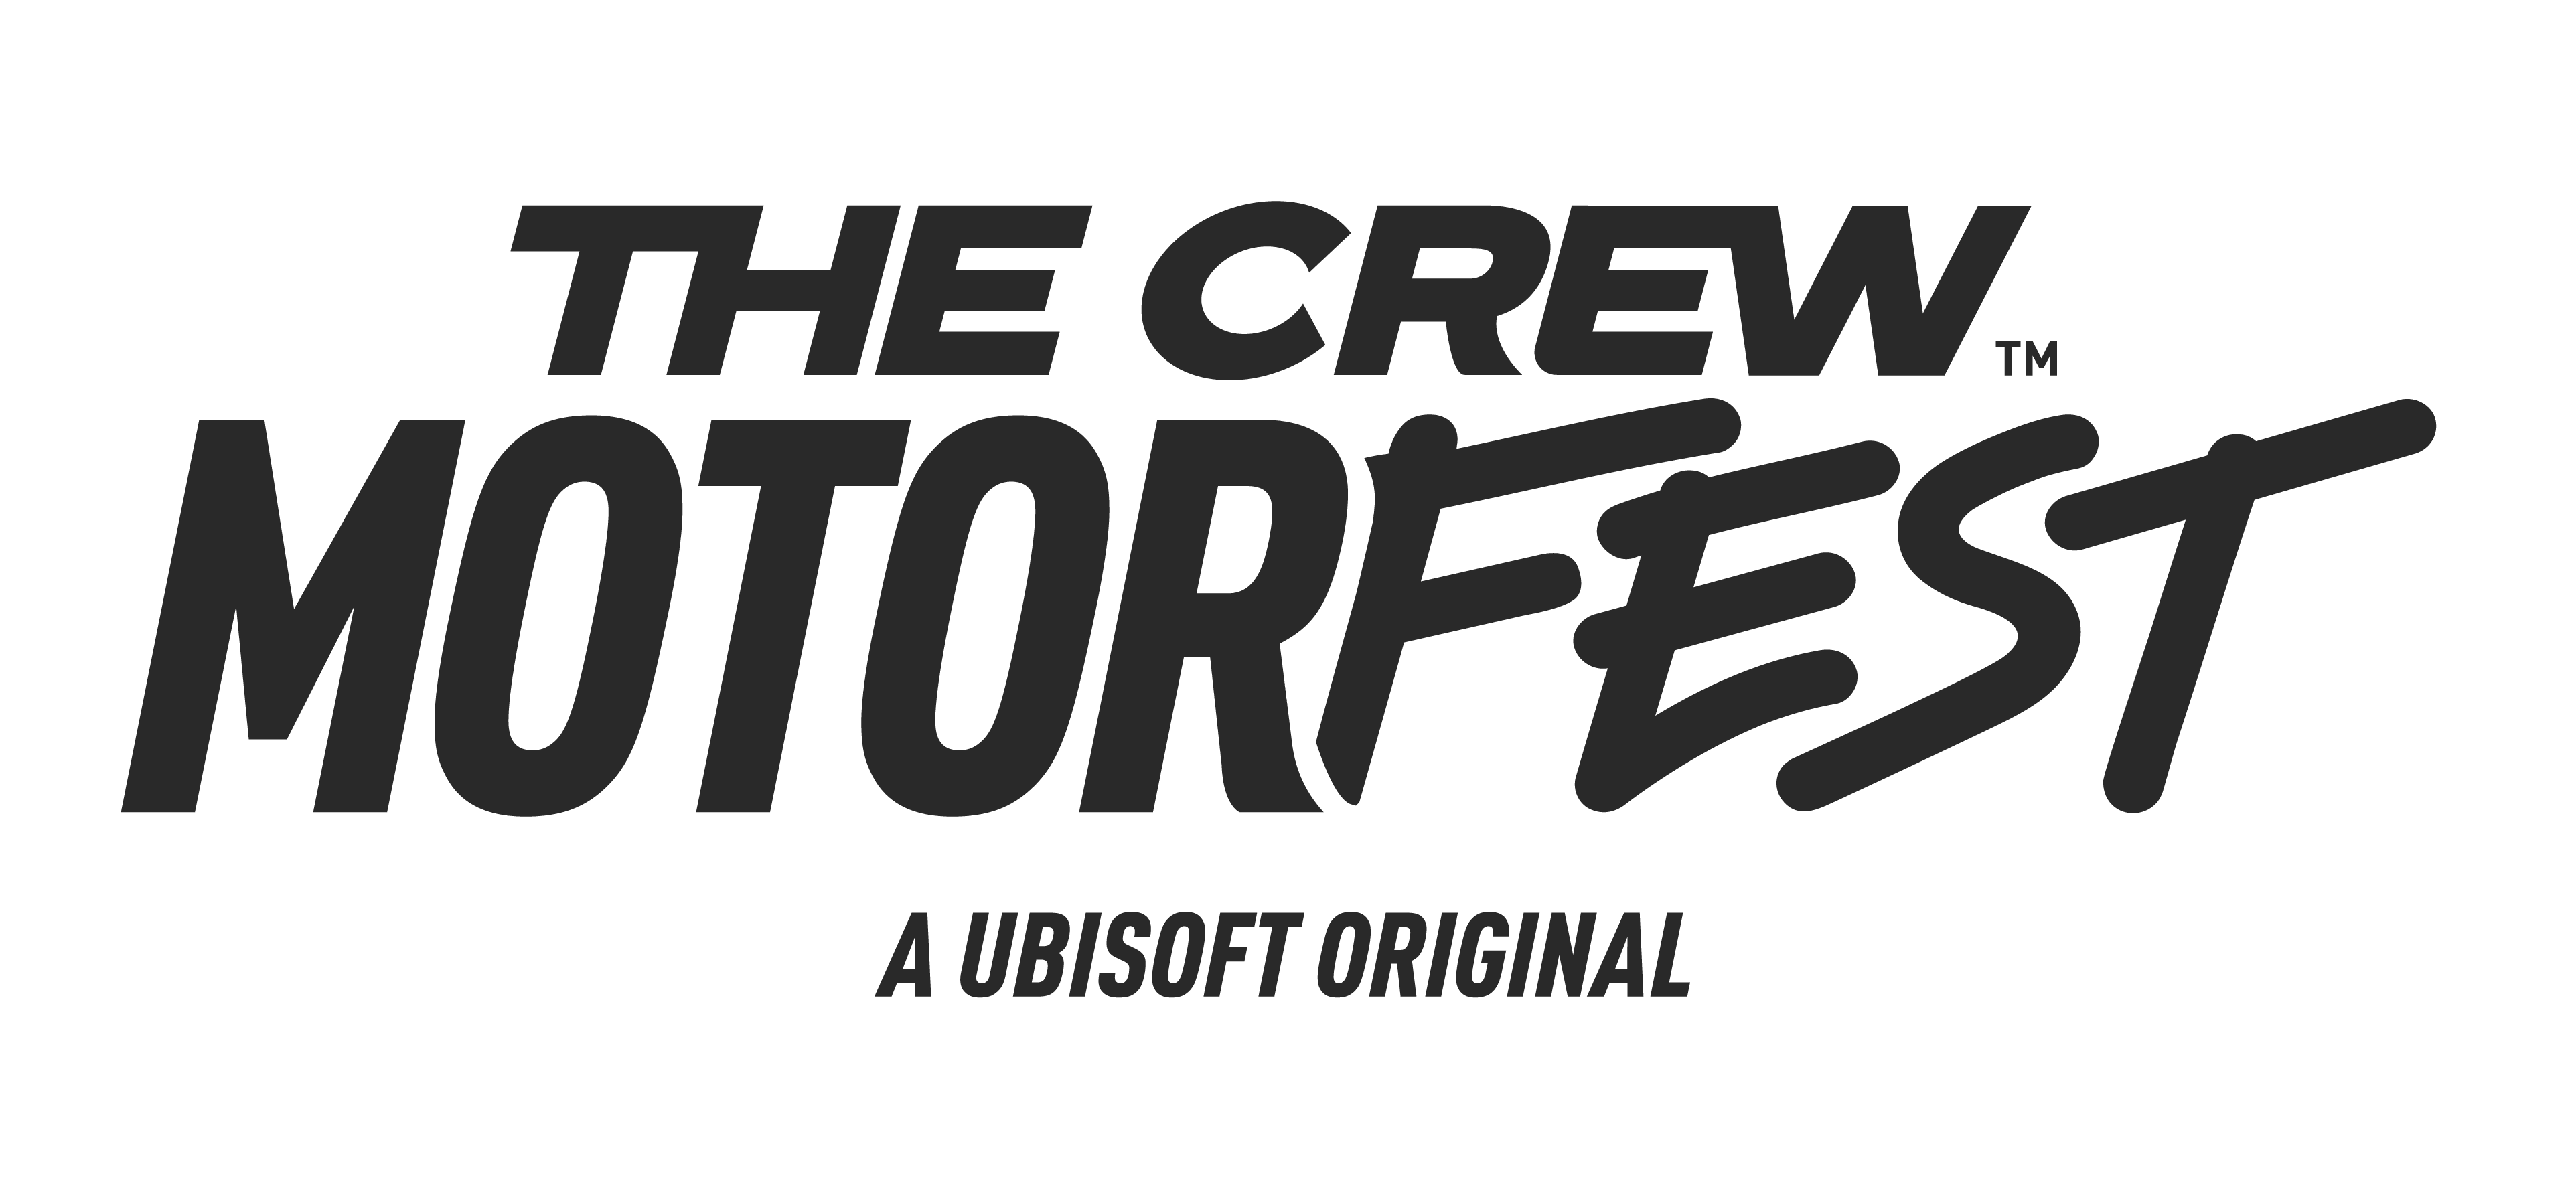 The Crew Motorfest, THE CREW Wiki